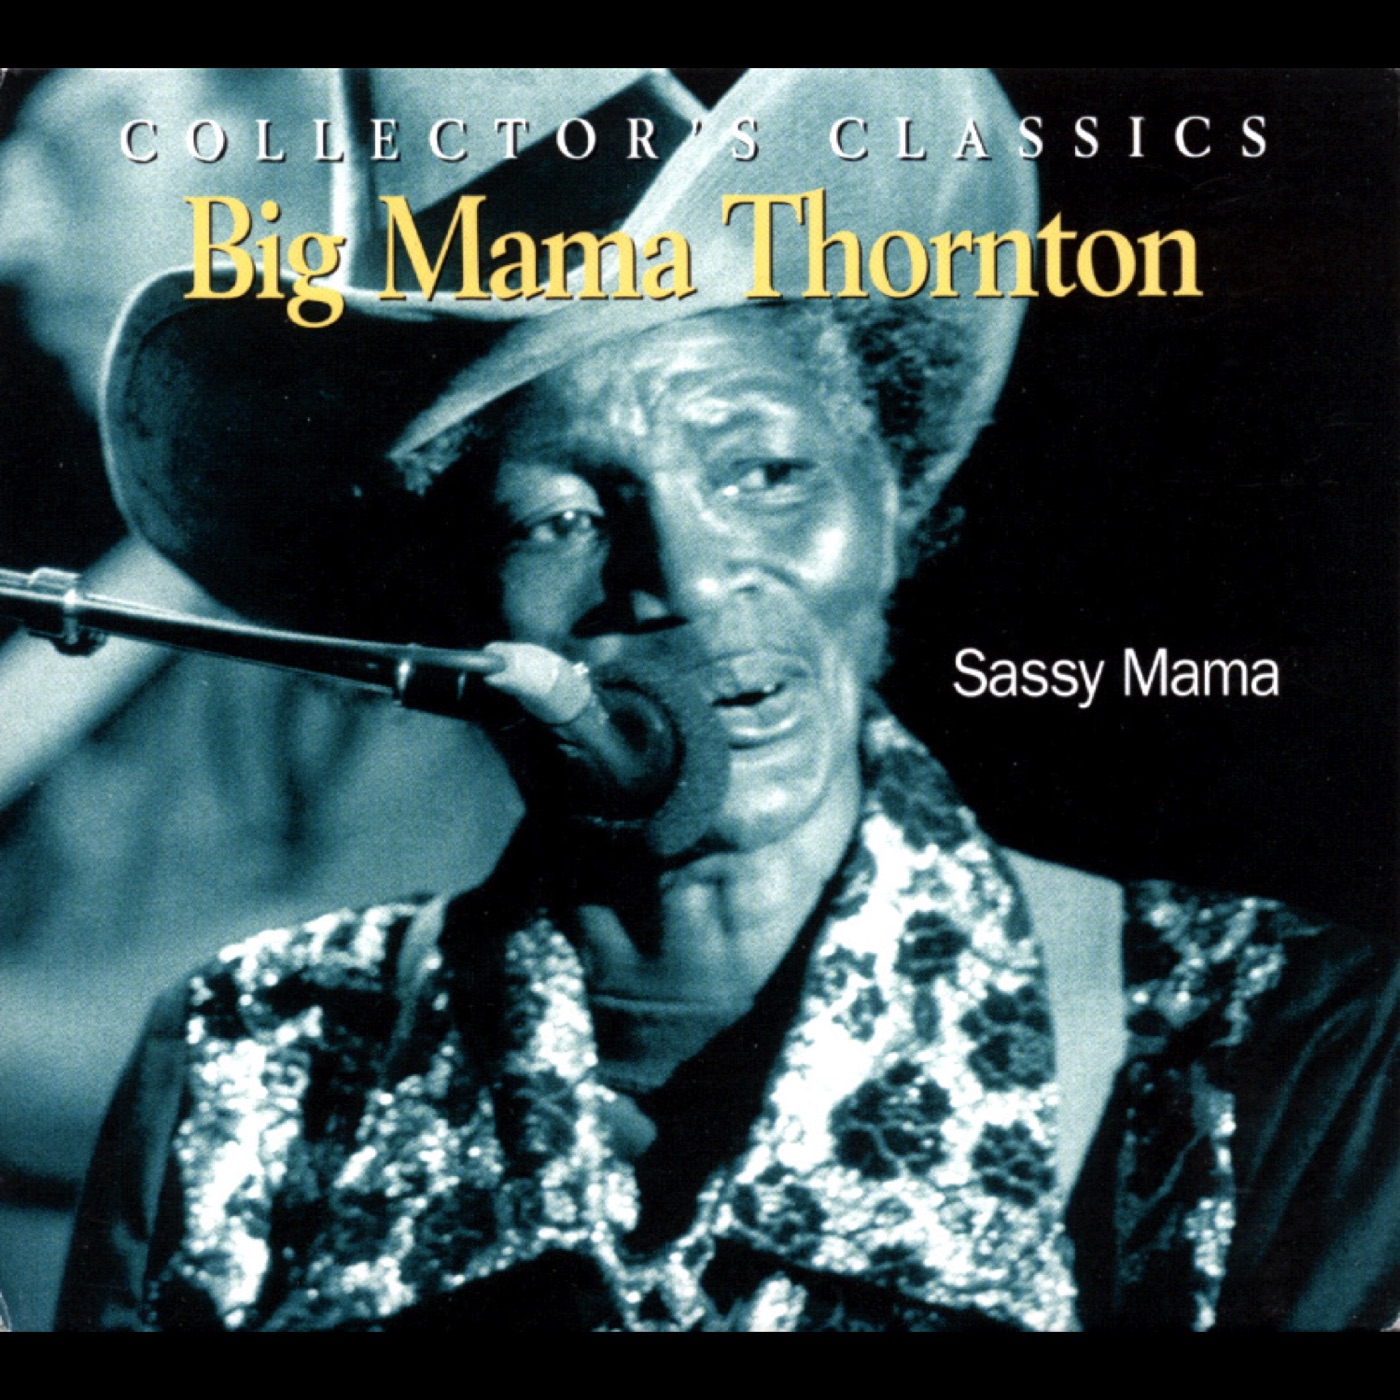 Sassy Mama by Big Mama Thornton